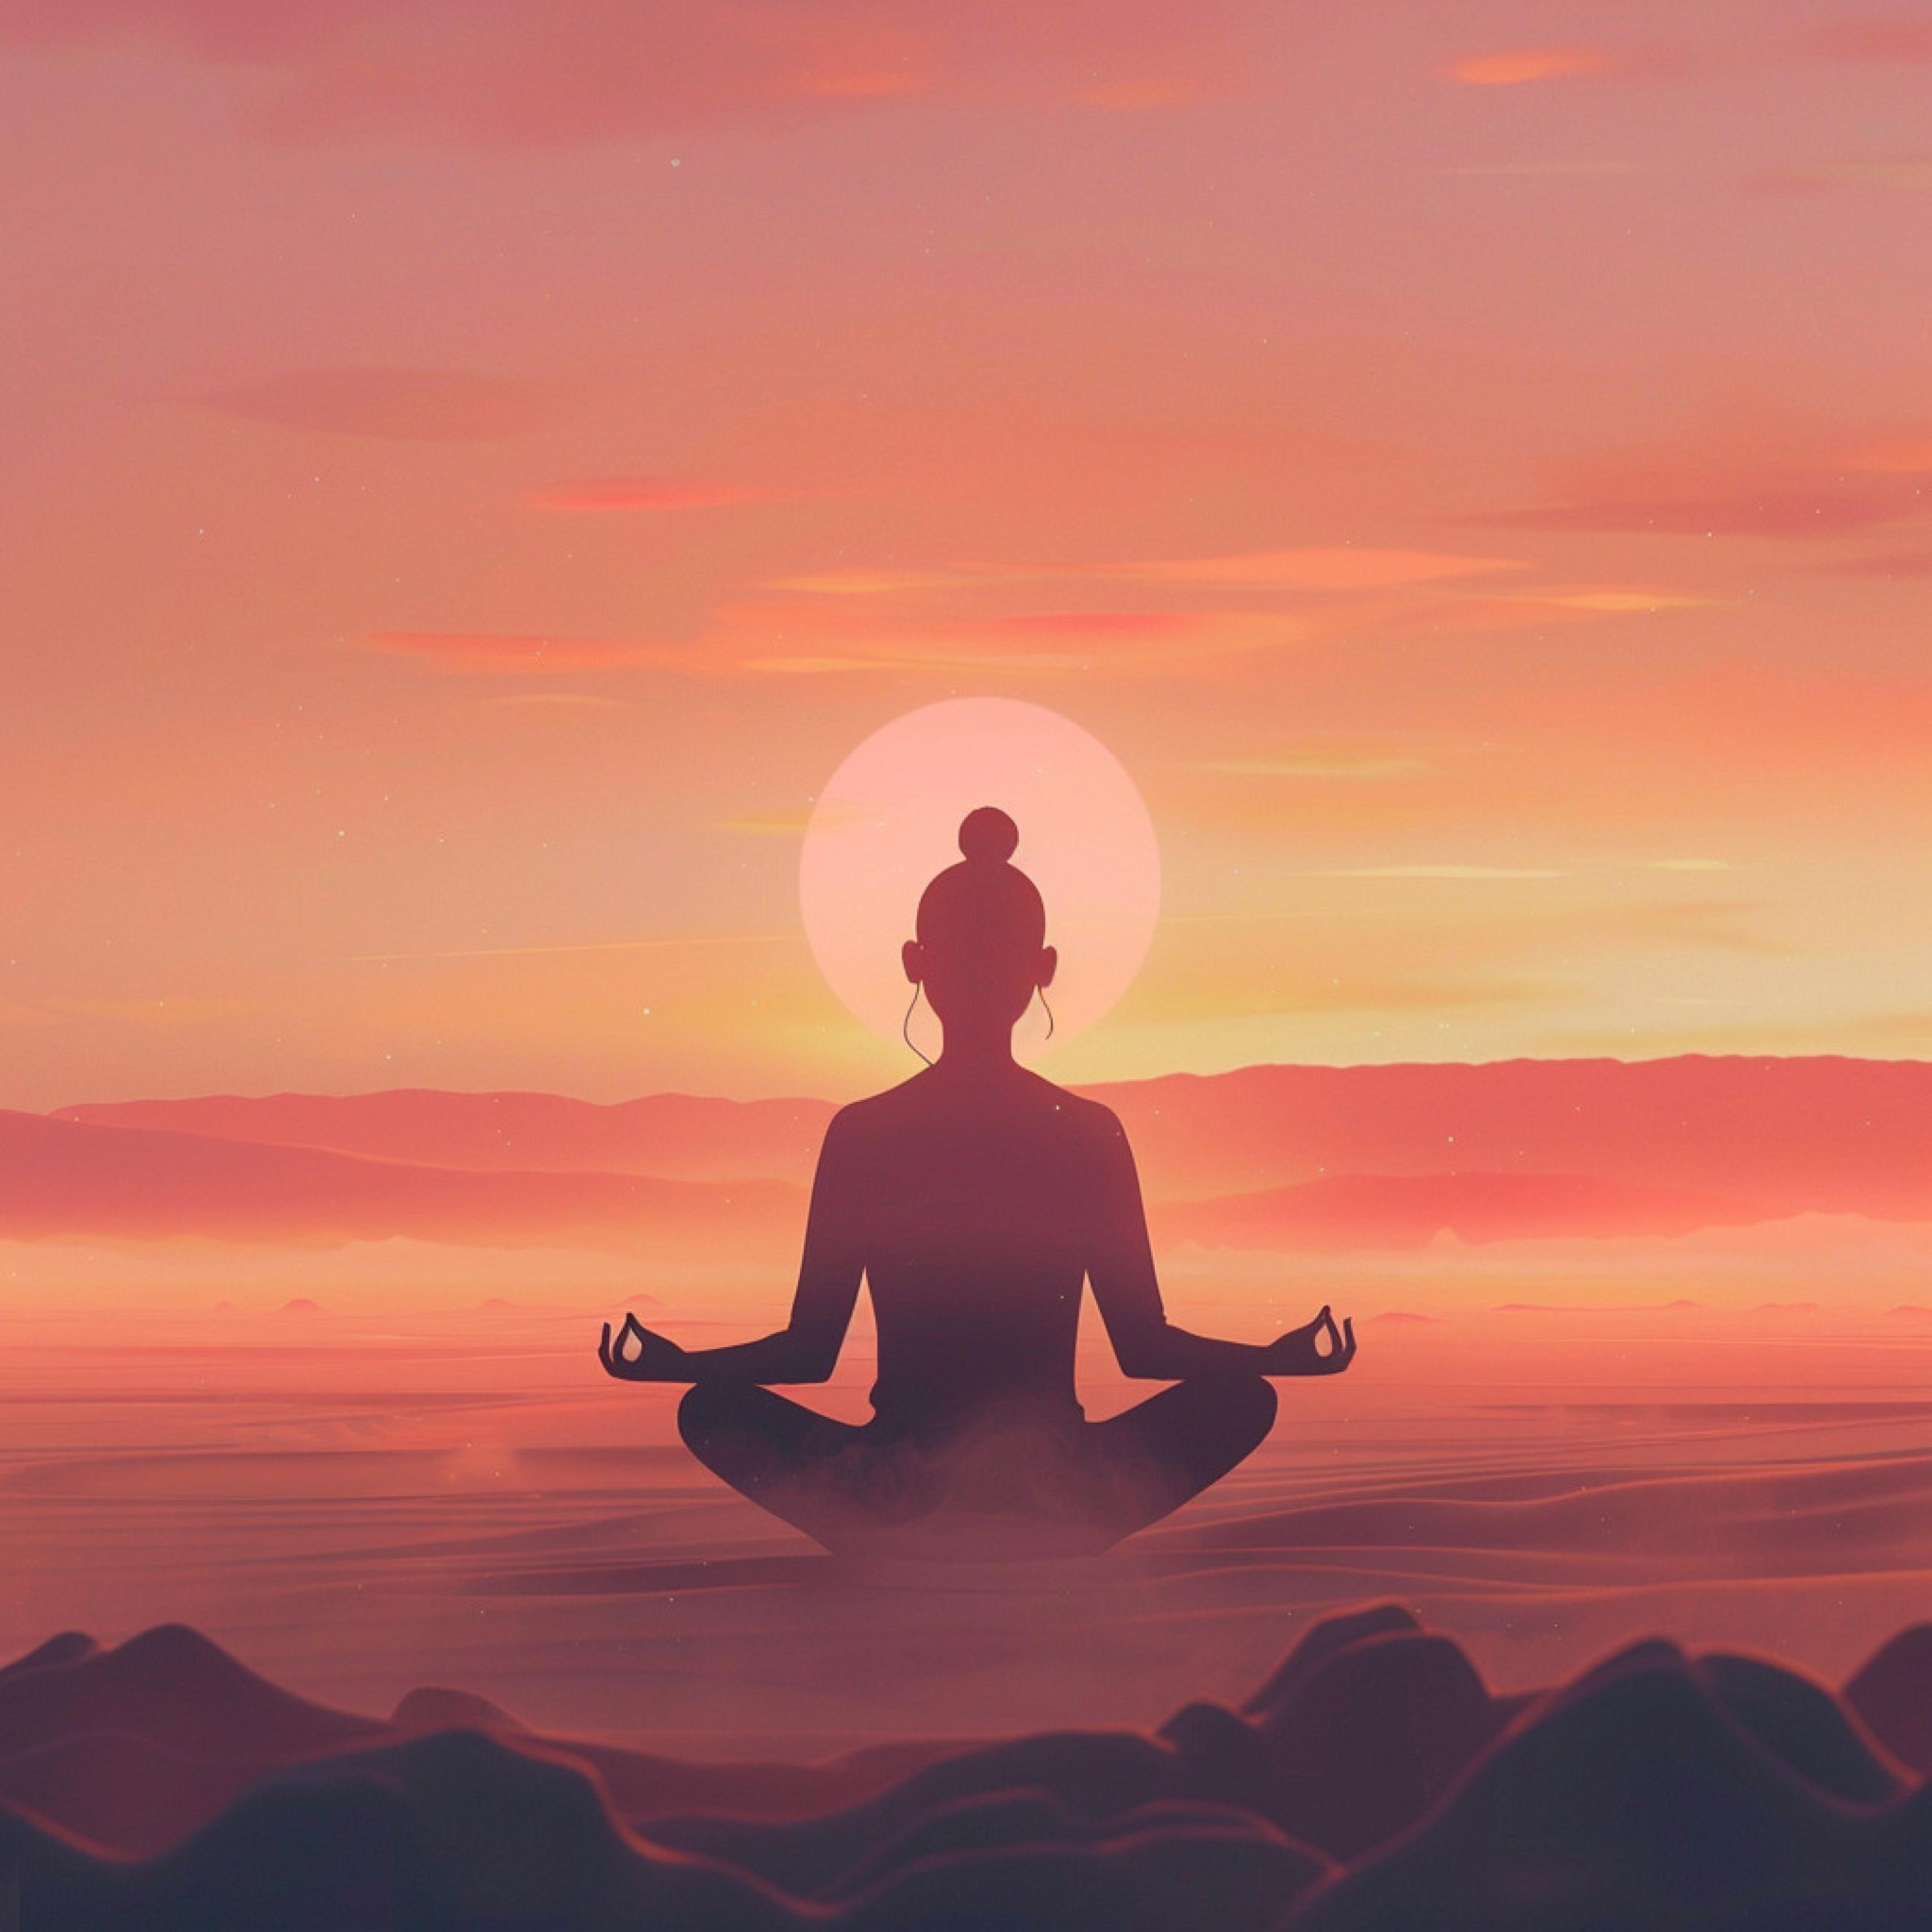 Meditation Simple - Tones of Serenity